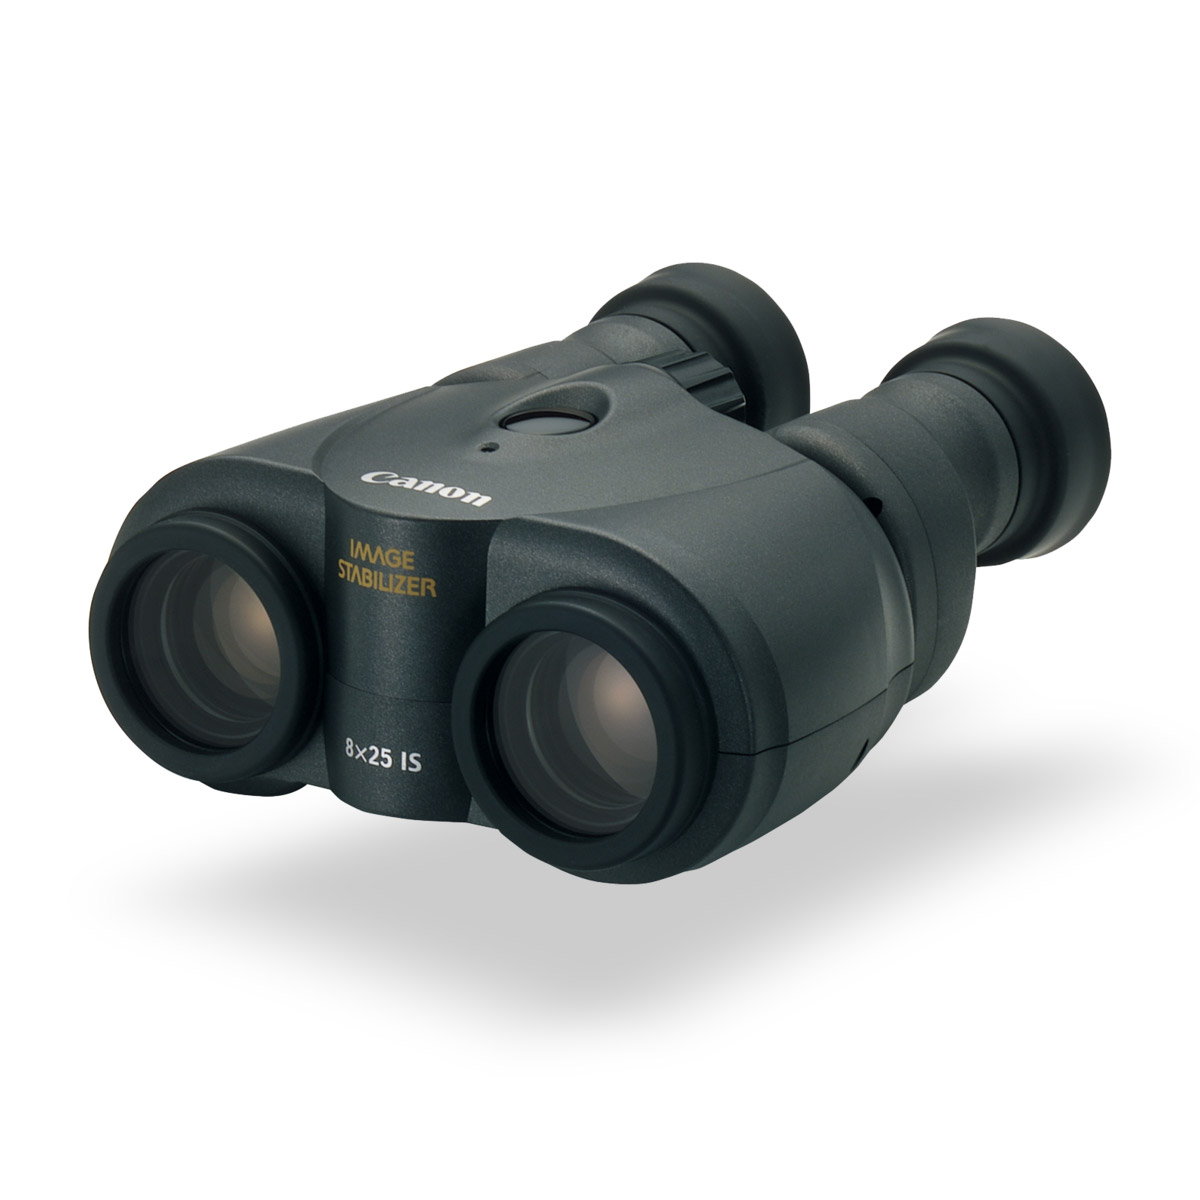 Canon 8 x 25 IS binoculars